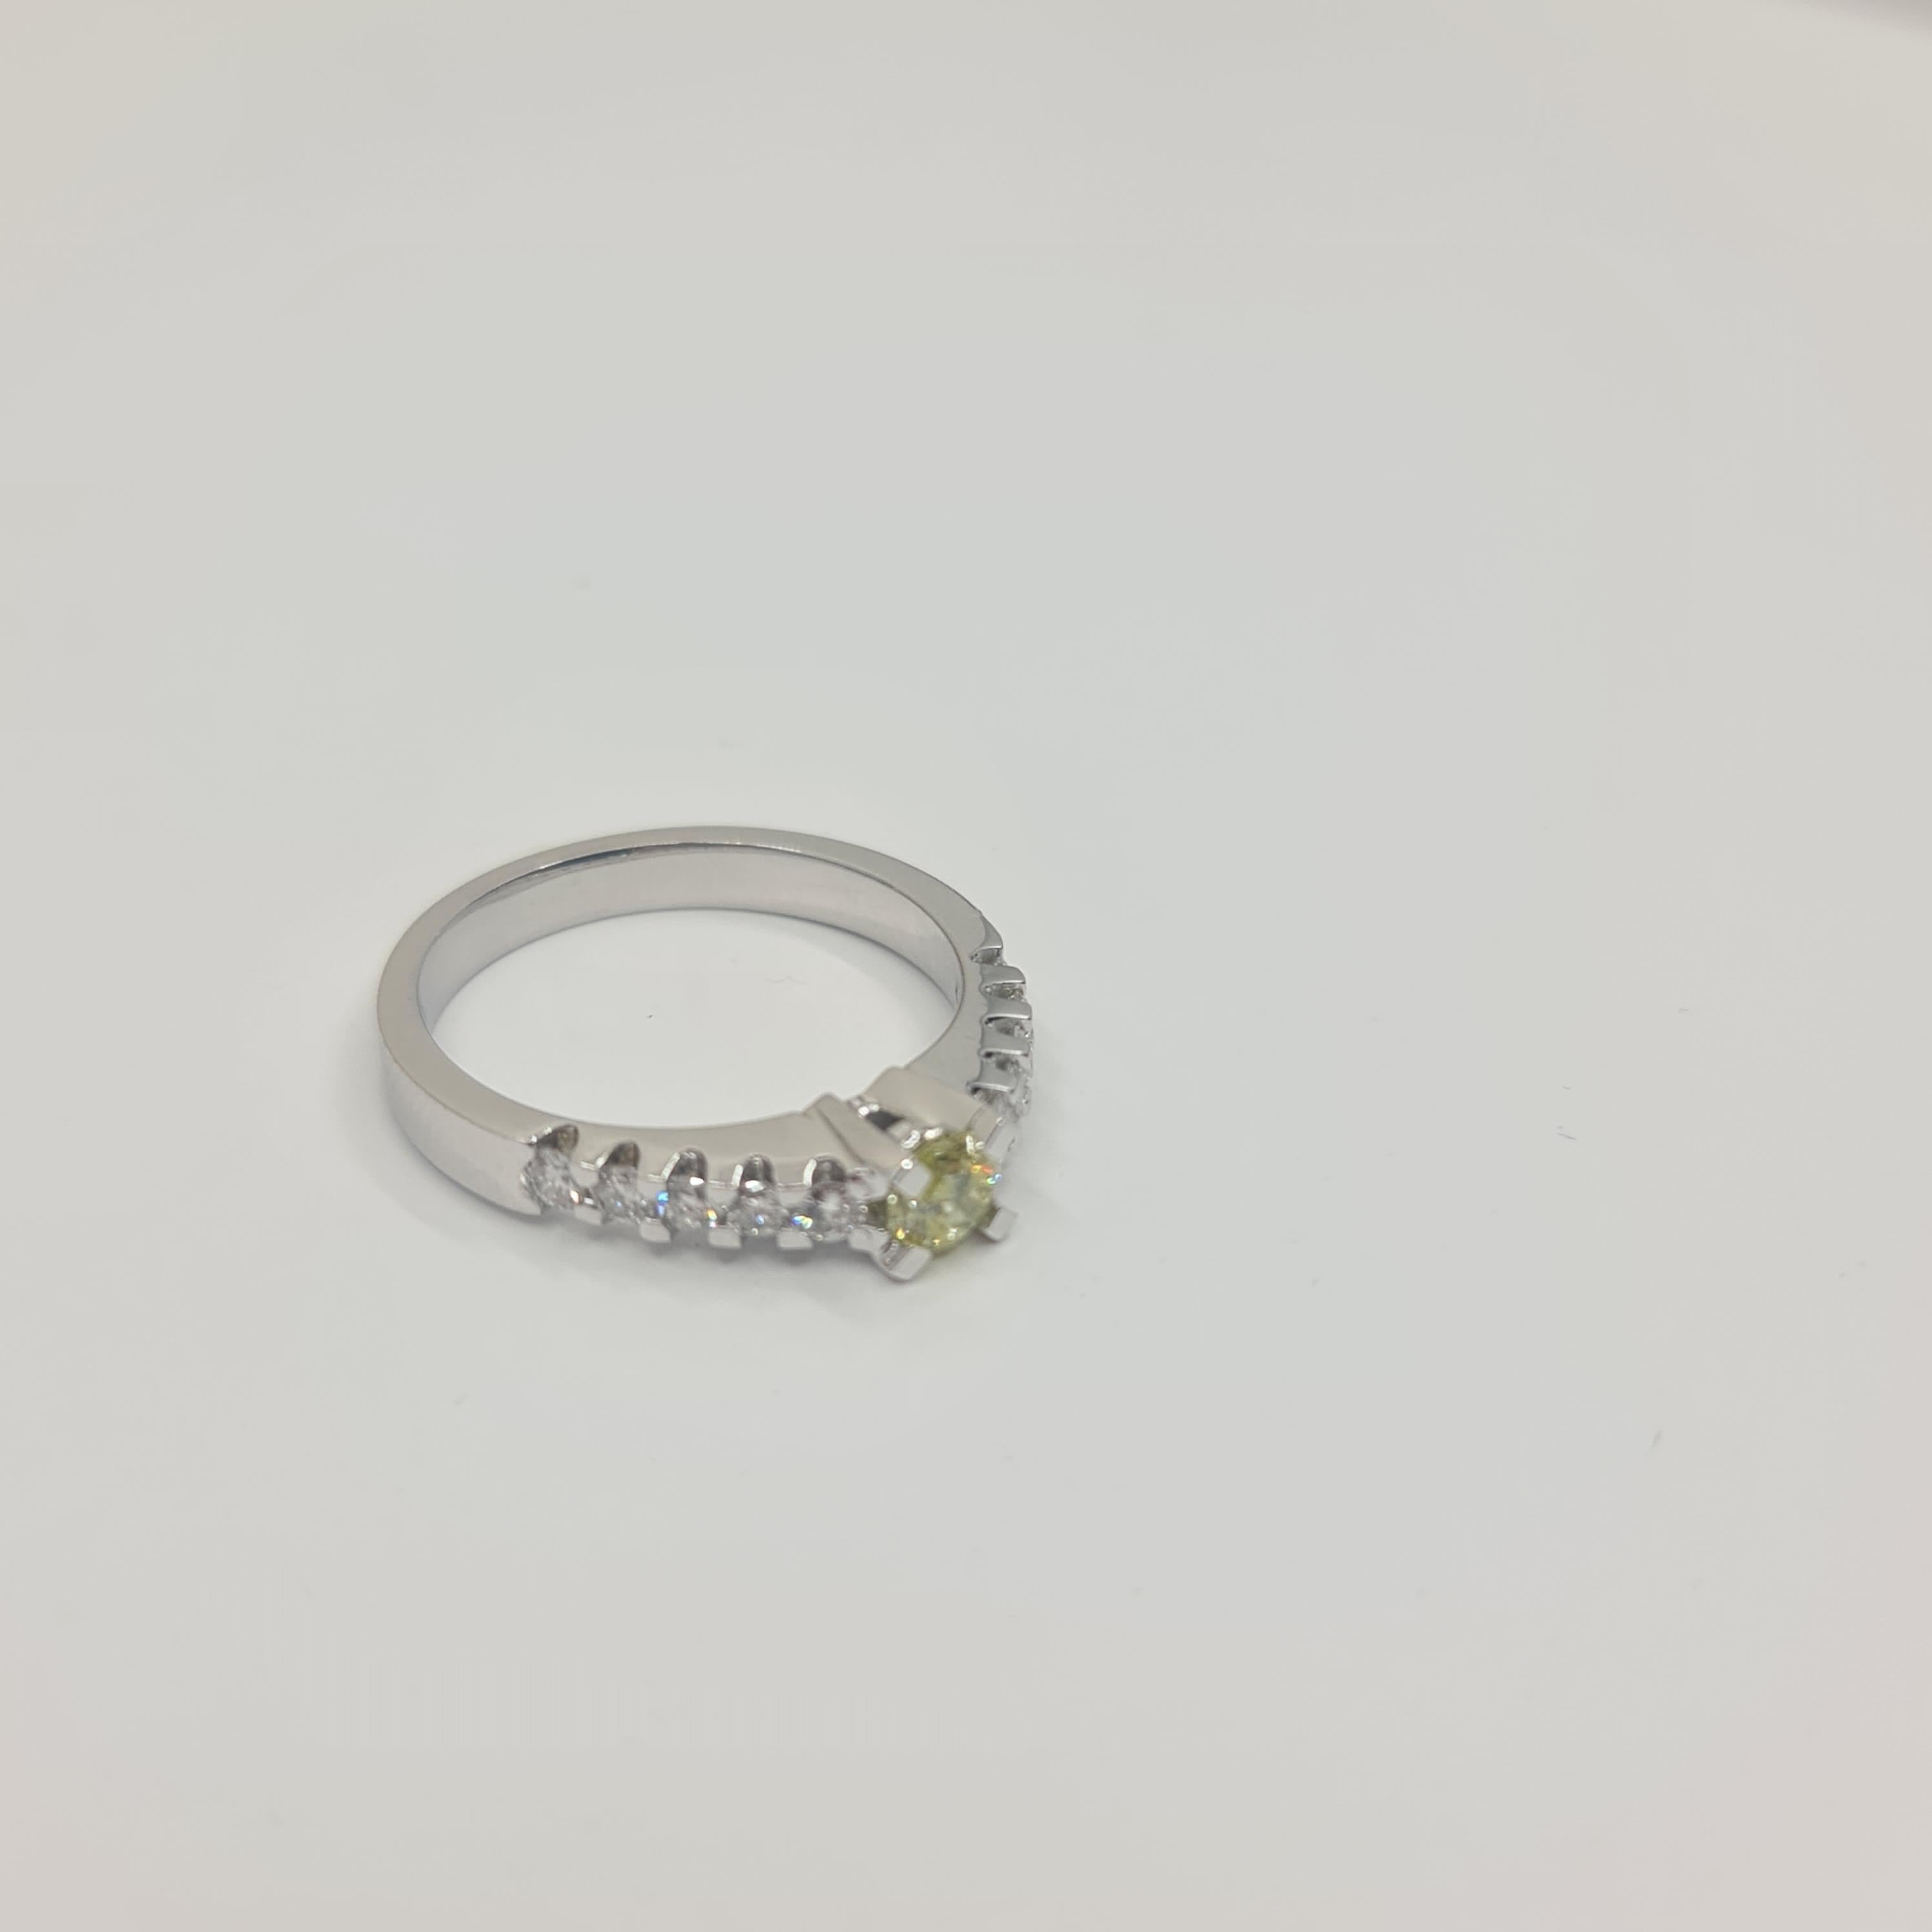 Brilliant Cut Exquisite Solitaire Diamond Ring 0.28 Carat Fancy Green Brilliant  For Sale